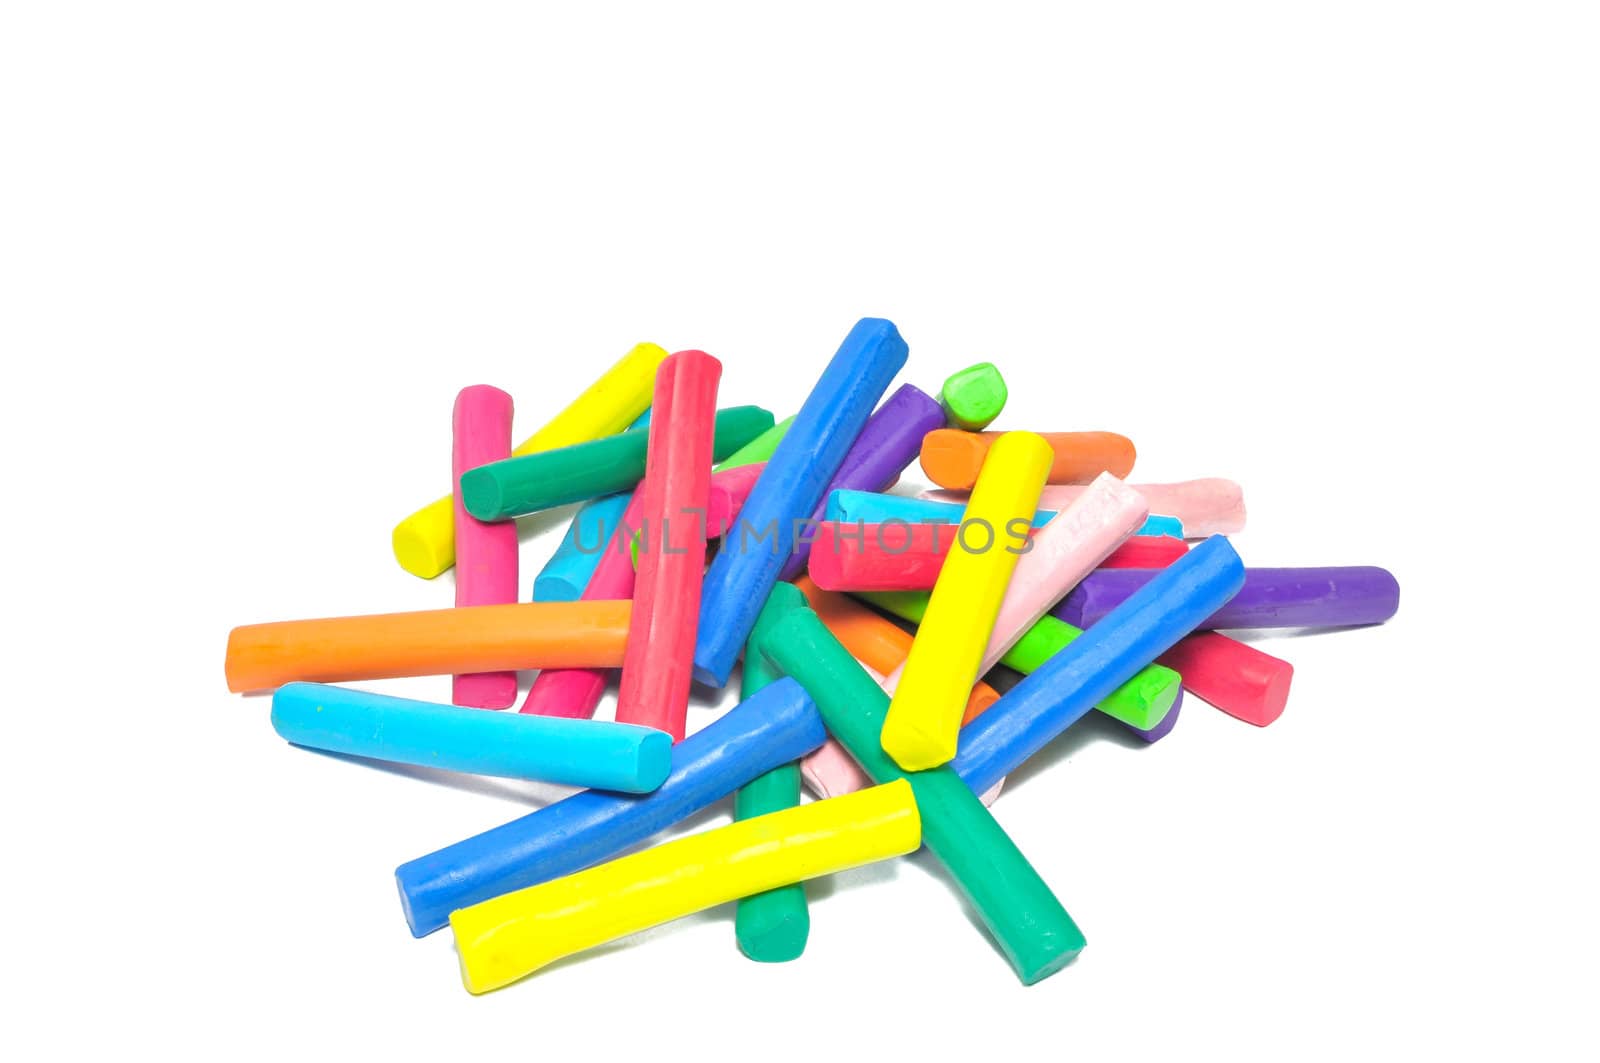 Bulk of colorful plasticine stick stand on white background